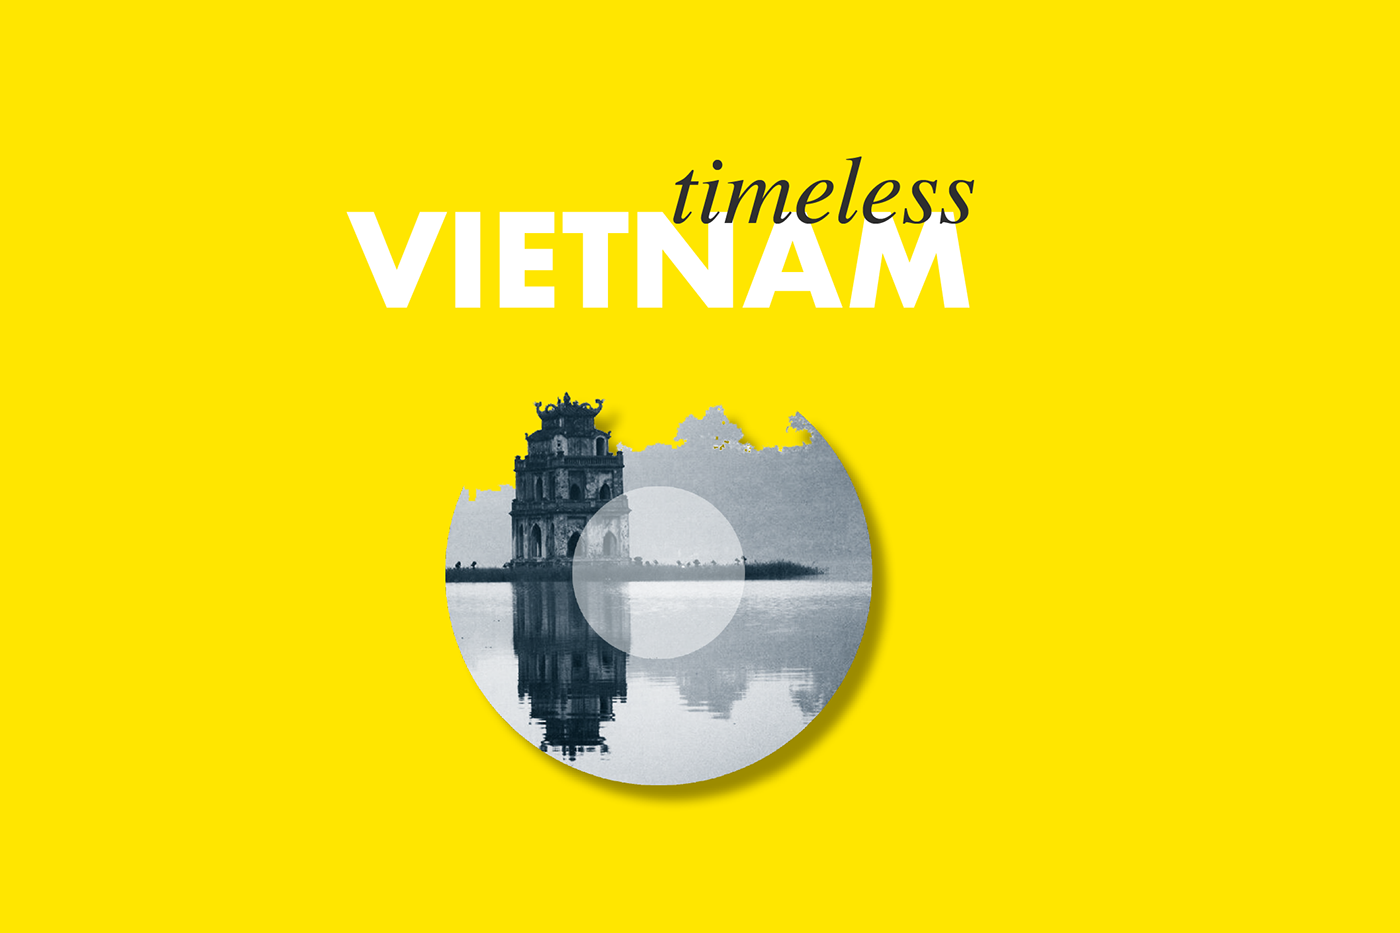 vietnam Landscape Booklet book tourism Da Nang hanoi ho chi minh hue hoi an